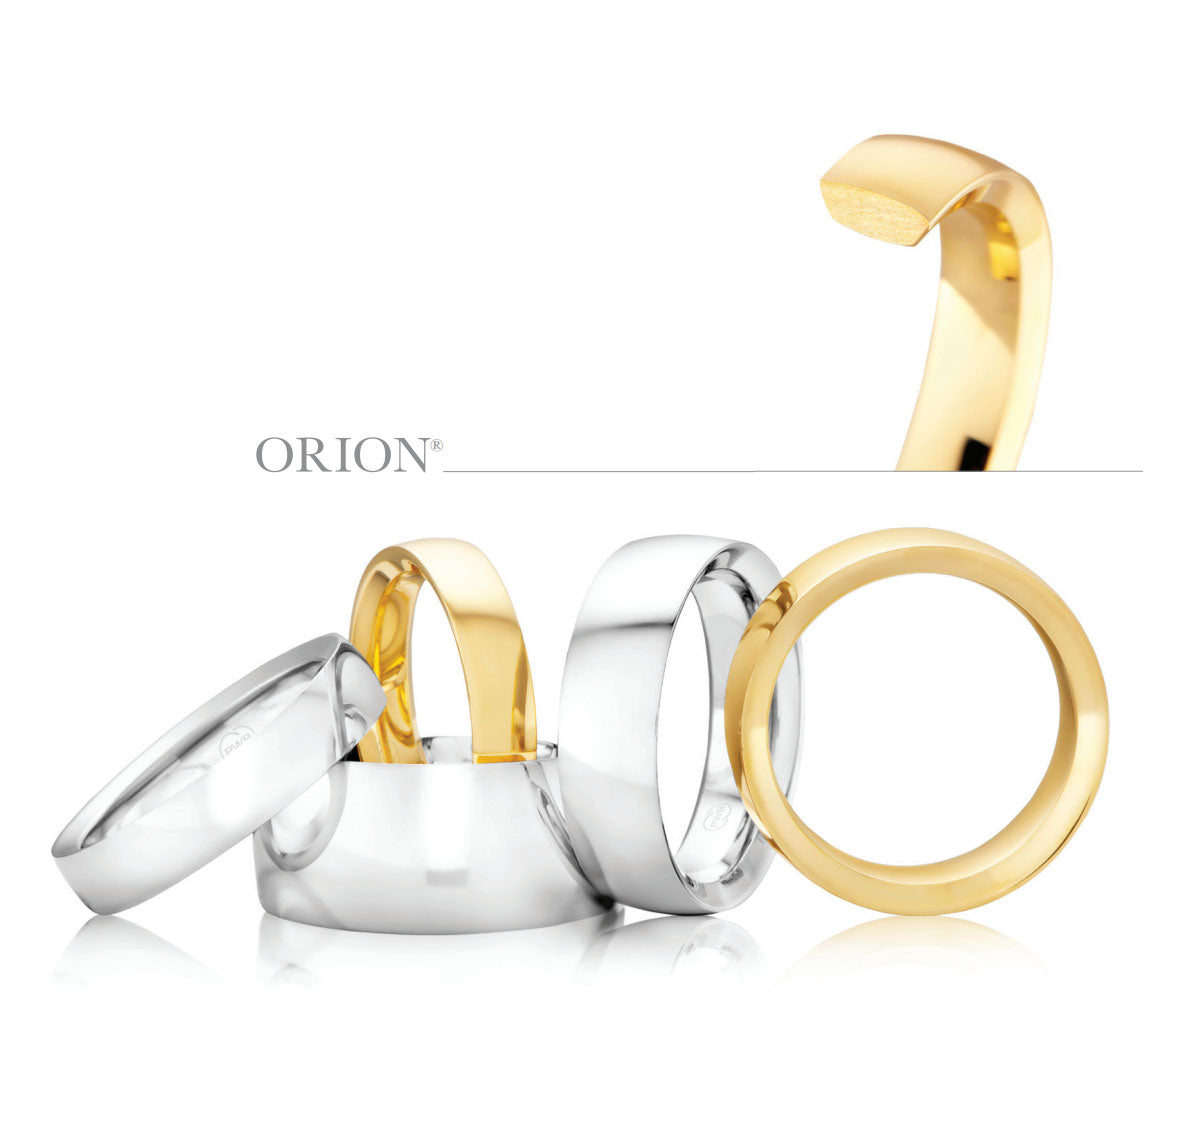 Gents Luxury "ORION" Wedding Ring.